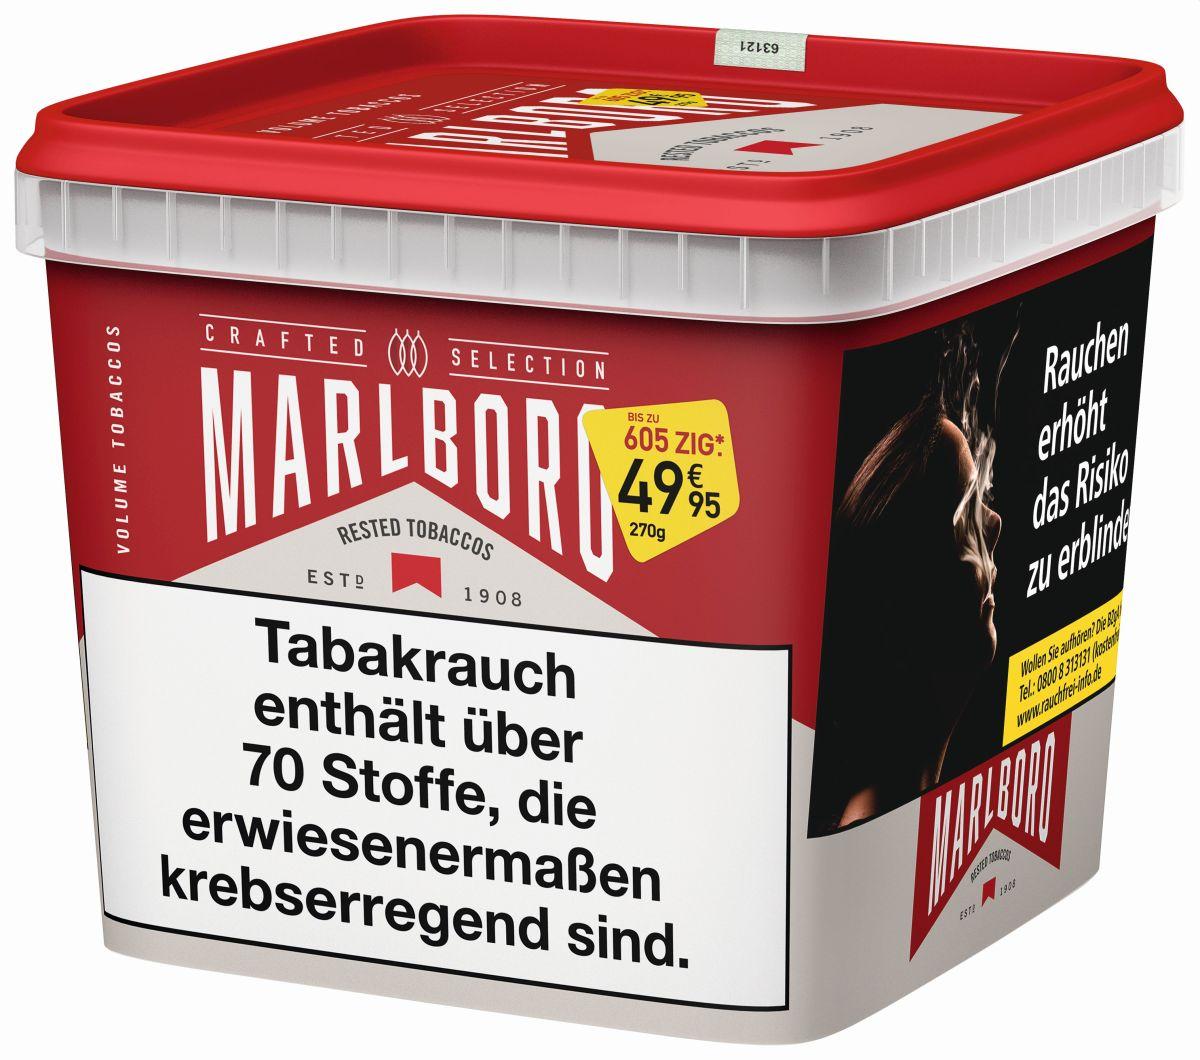 Marlboro Crafted Selection 1 x 190g Tabak